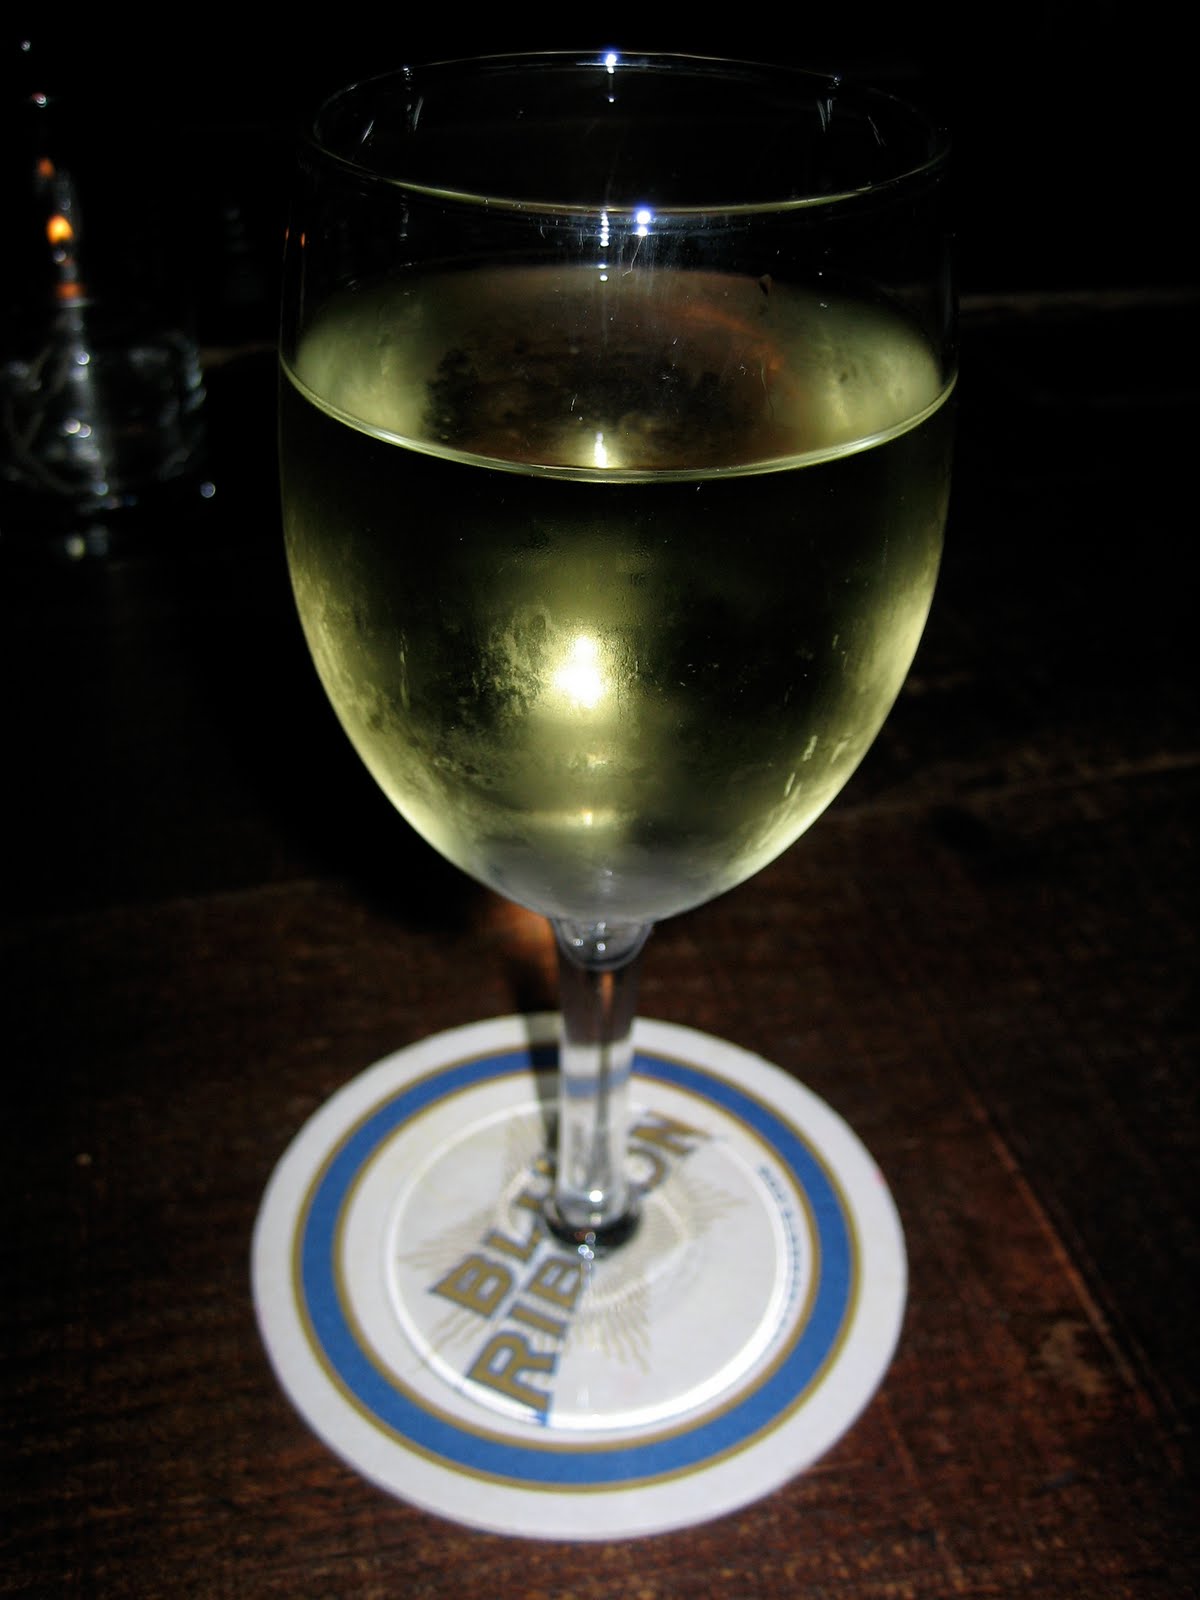 Blue Ribbon Downing Street Wine Bar